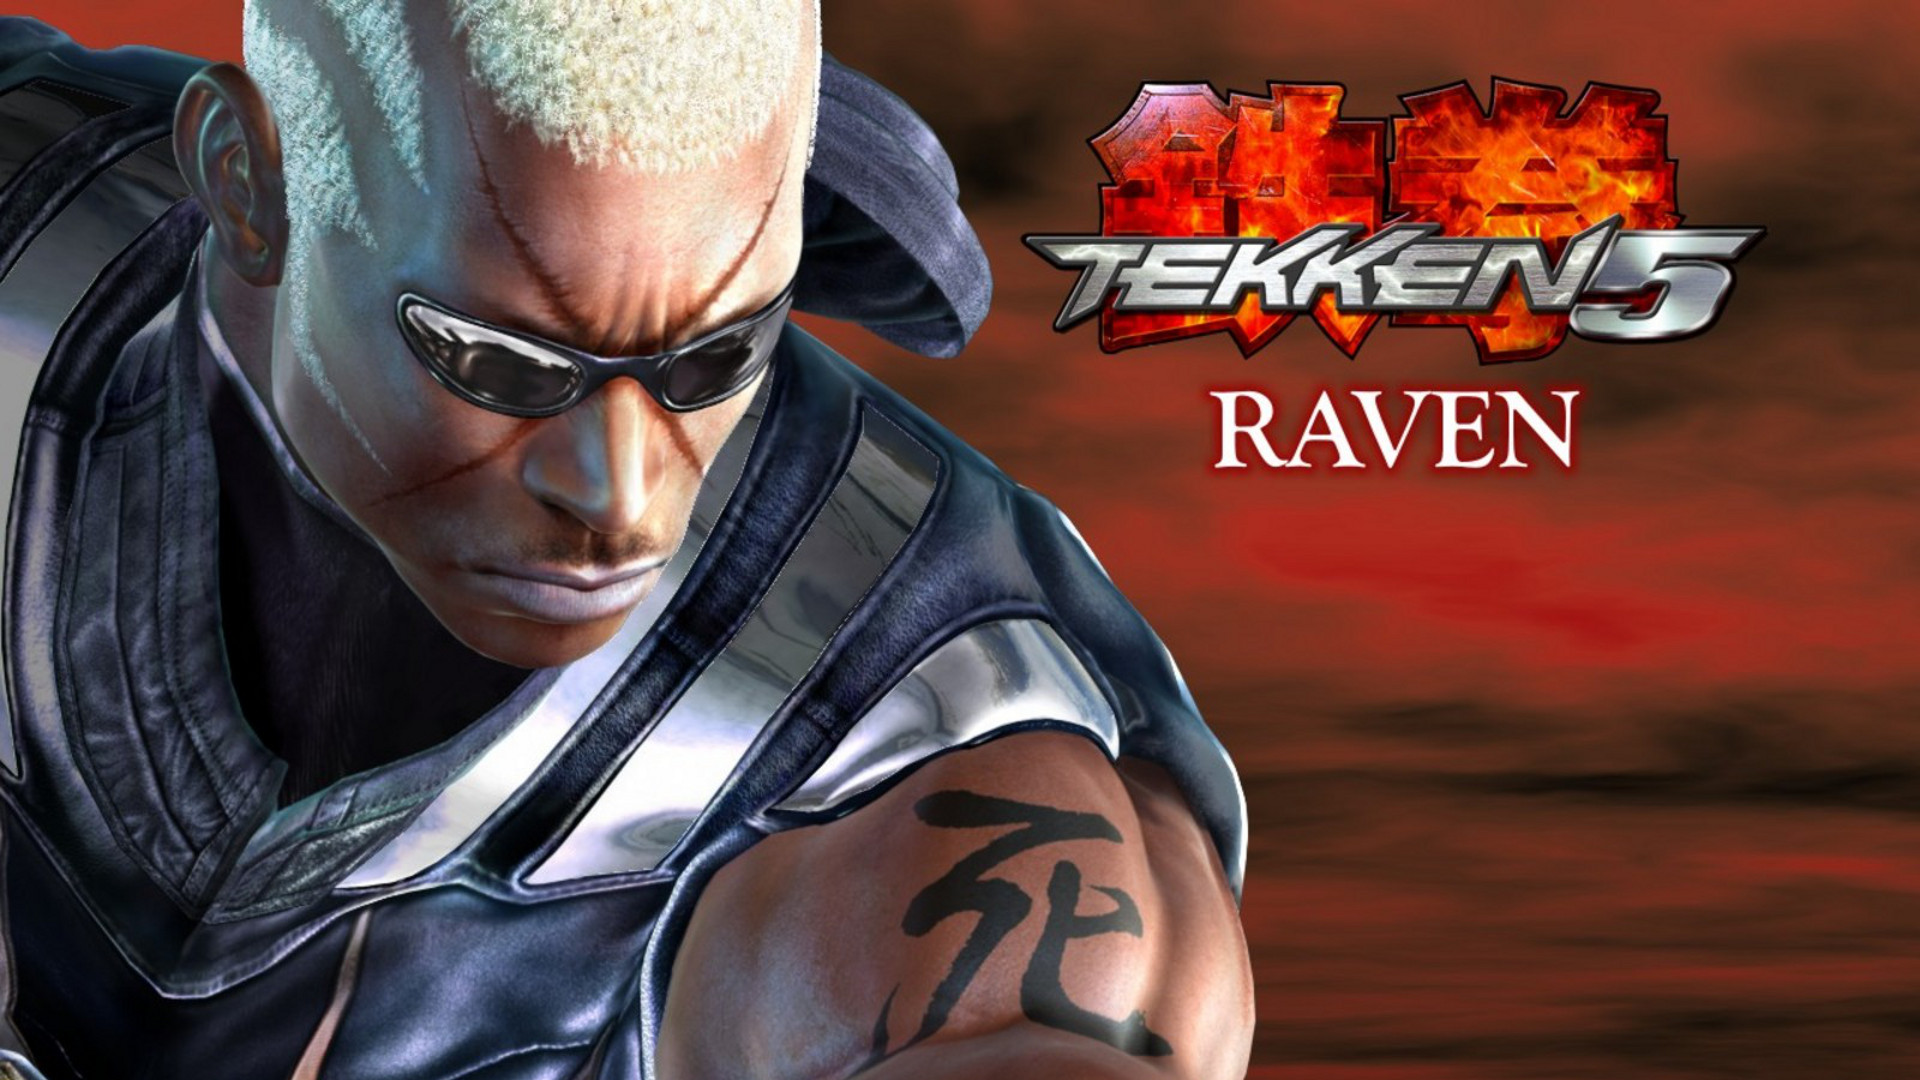 Baixe gratuitamente a imagem Tekken, Videogame, Tekken 5, Ravena (Tekken) na área de trabalho do seu PC